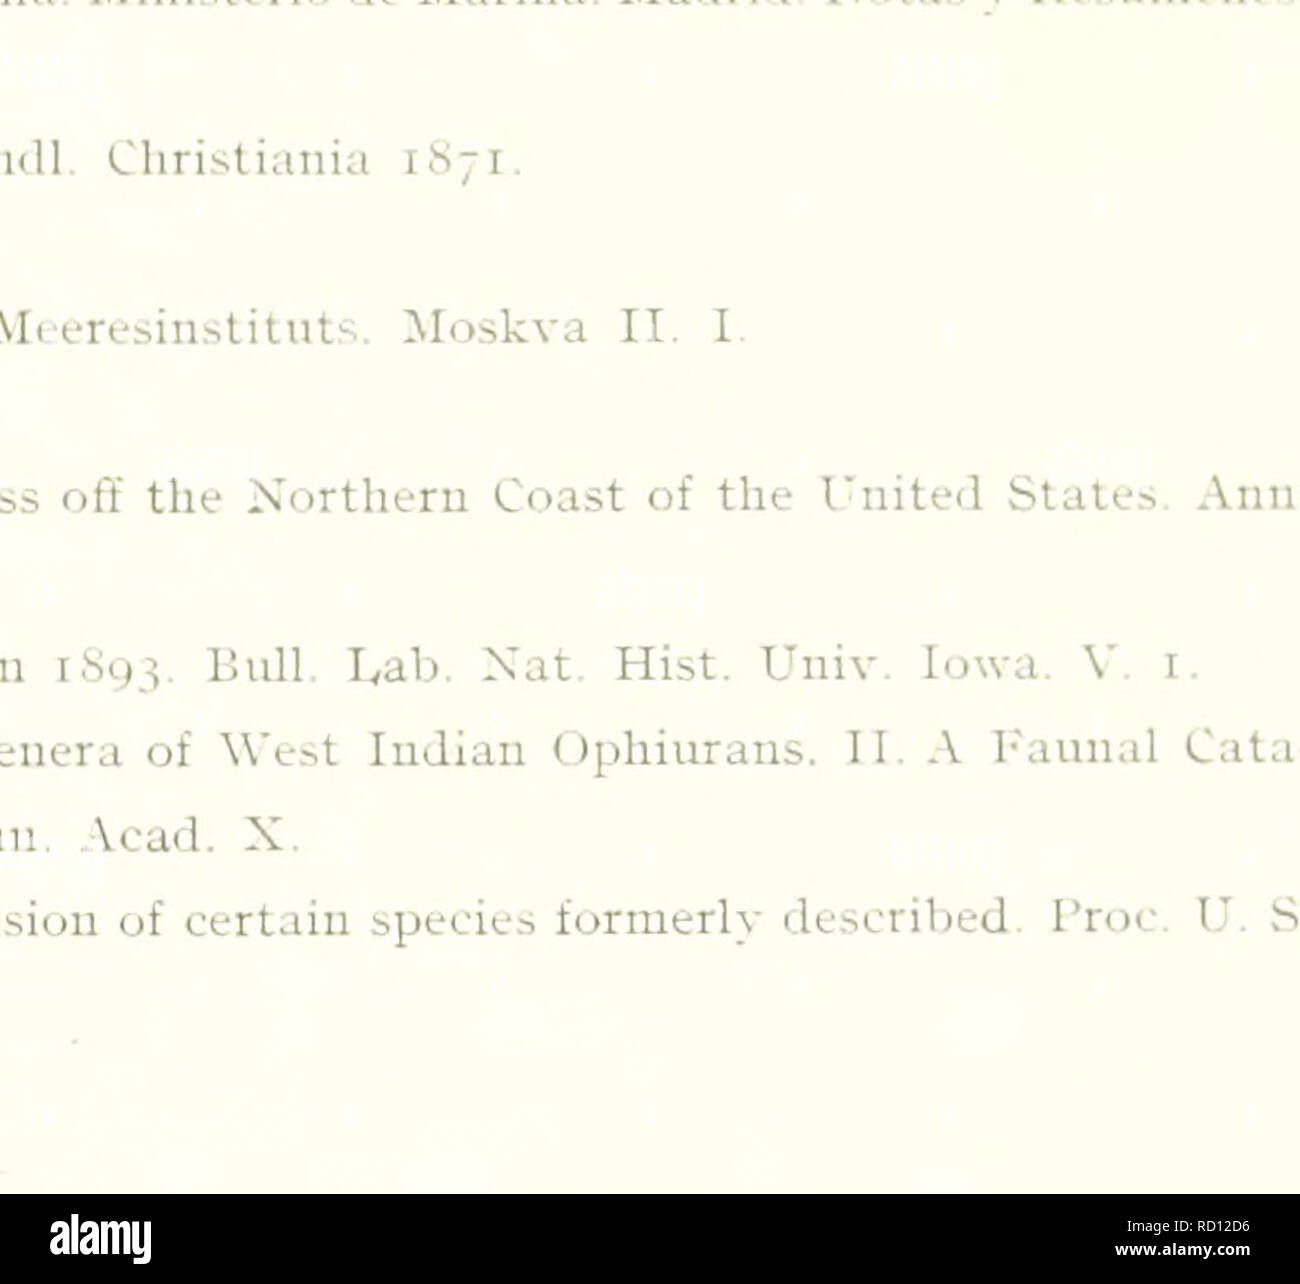 . The Danish Ingolf-expedition. Marine animals -- Arctic regions; Scientific expeditions; Arctic regions. COI'EPODA 49 1905. Eucalamis eloiigatus Dana. Ksterlv, p. 131 132, figs. 6 a- (i. 1905. ' — — — Th. Scott, p. 222. 1905. — — — Farran, p. 30. 1906. — — — Pearson, pp. 6—7. 1906. — — — G. O. Sars, p. 2. 190S. luicalanus elongatus Dana. v. Bremen, p. 15, fig. 10. 190S. — — — I'arran, p. 21. 190S. — — — Wolfenden, p. 29. 1910. — — — Farran, pp.93- 94, pl.XIV. 1911. — — — Wolfenclen, p. 204. Description, f^. Size: 65 inni. The female.s .scarcely differ from Giesbrecht's description. No glandul Stock Photo